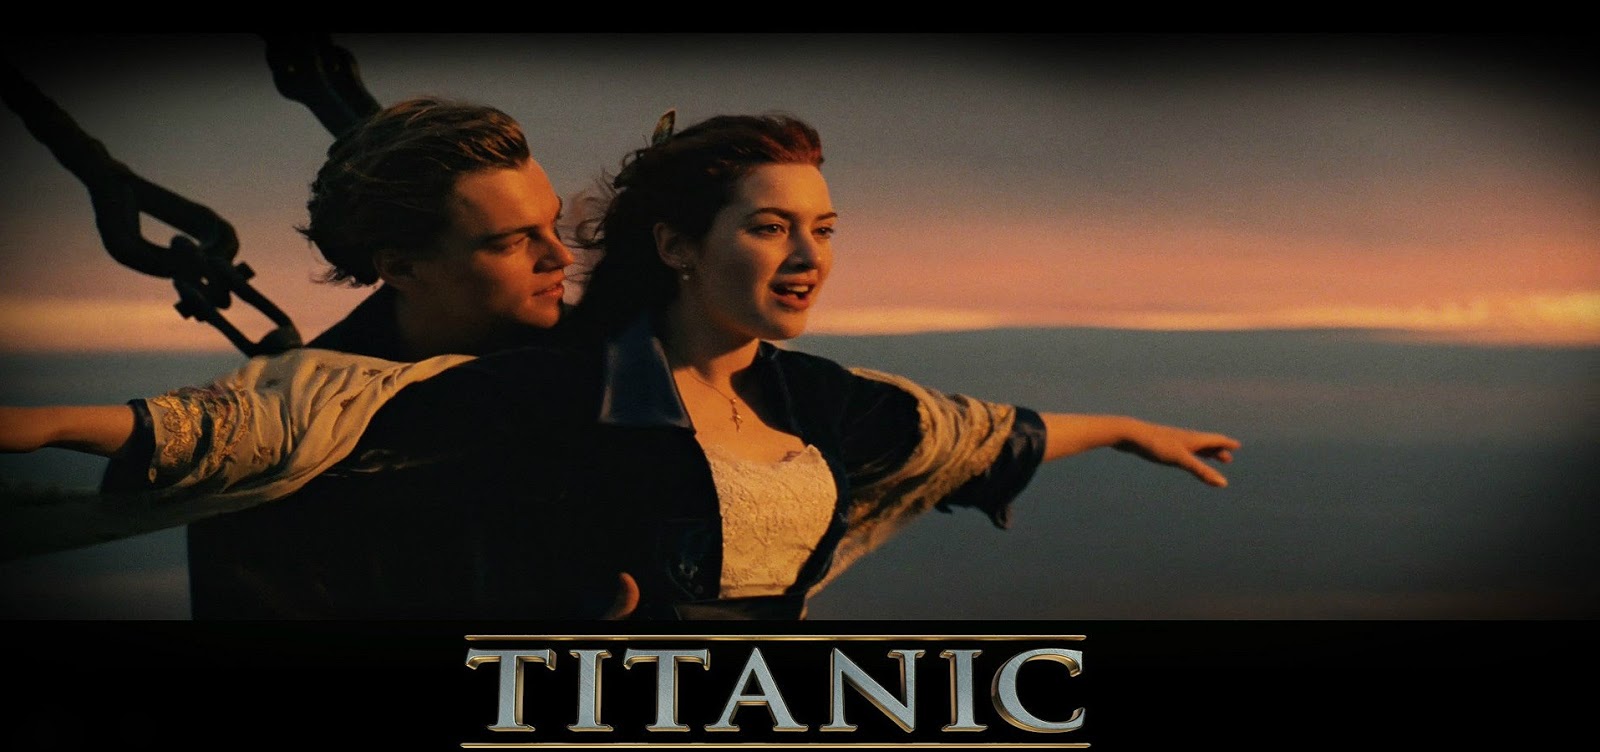 Titanic theme song lyrics - Song Lyrics Search Engine- Lyrics Air